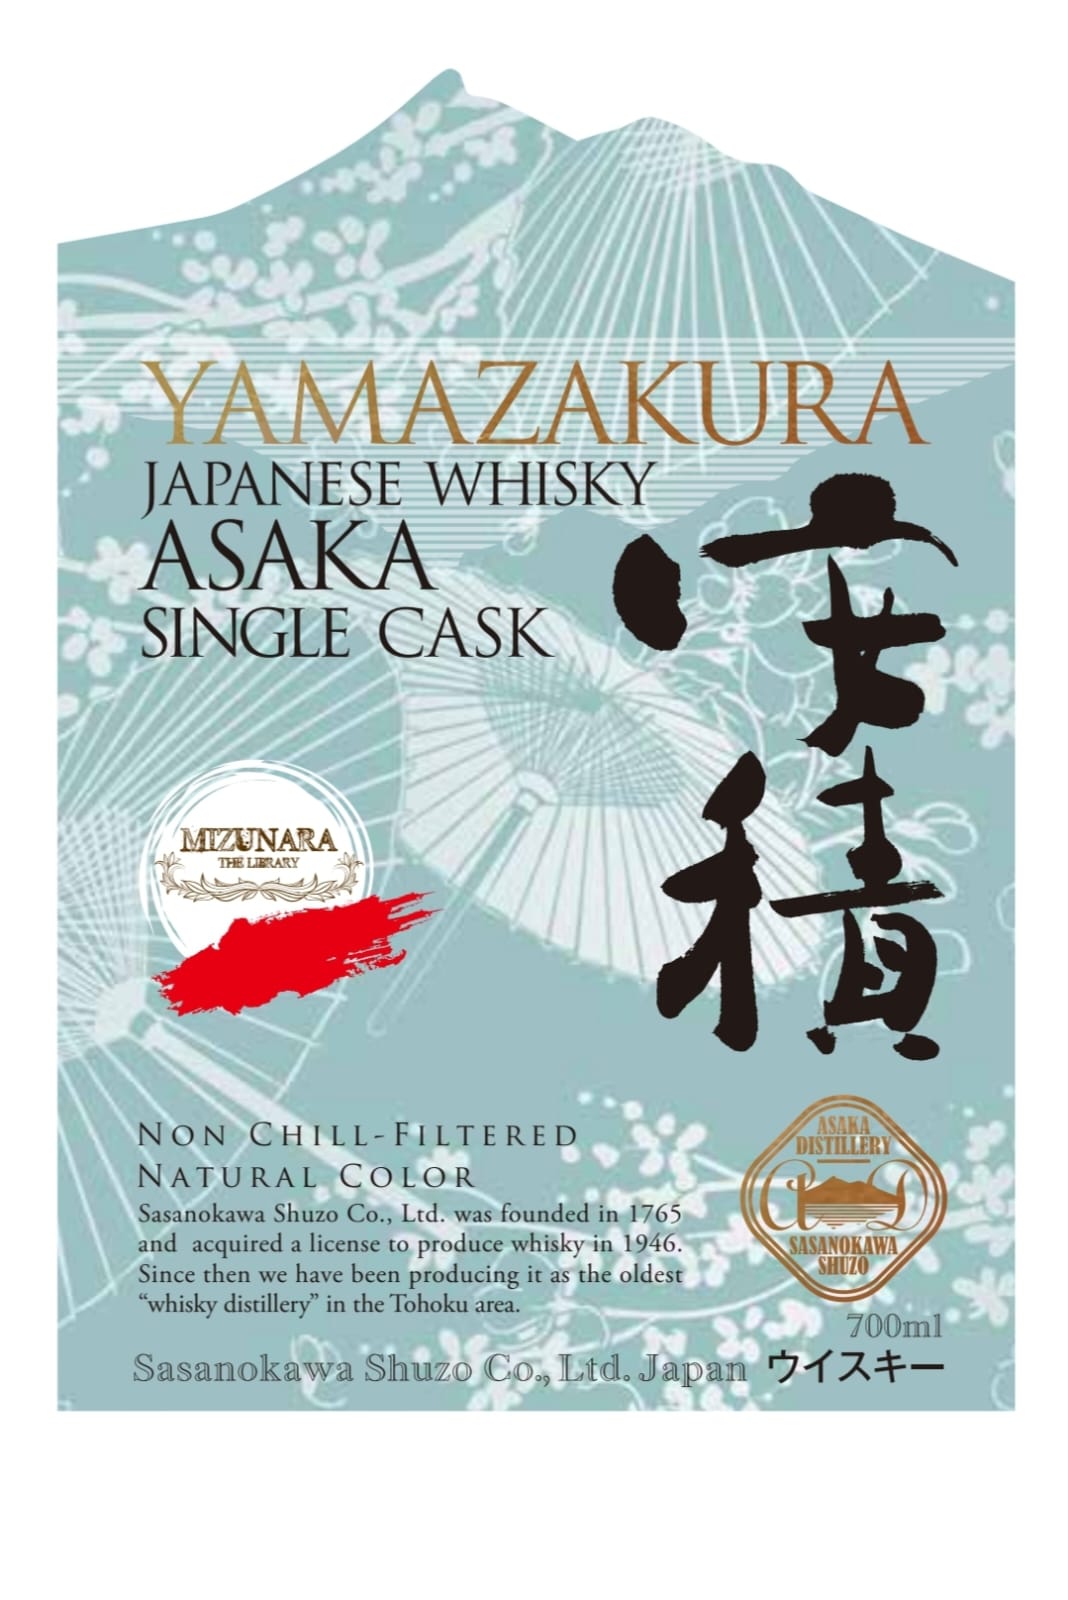 Yamazakura ASAKA Distillery "Mizunara Private Single Cask" Single Malt Japanese Whisky